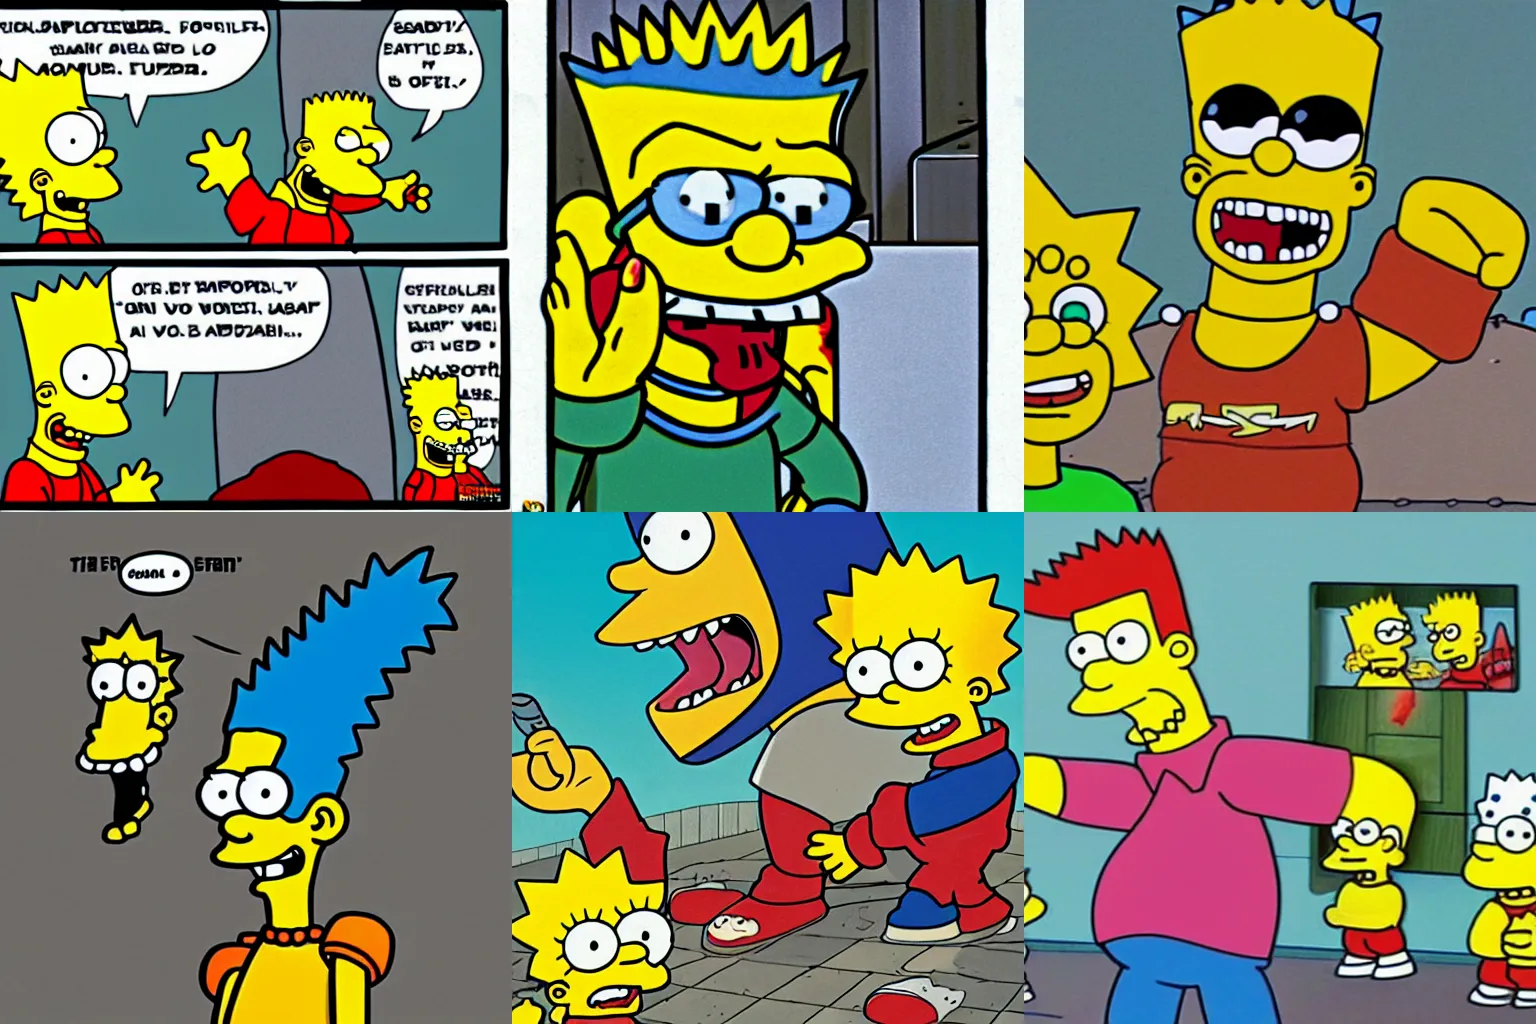 Woke Bart Simpson #adobeillustrator #cartoon #bart #bartsimpson